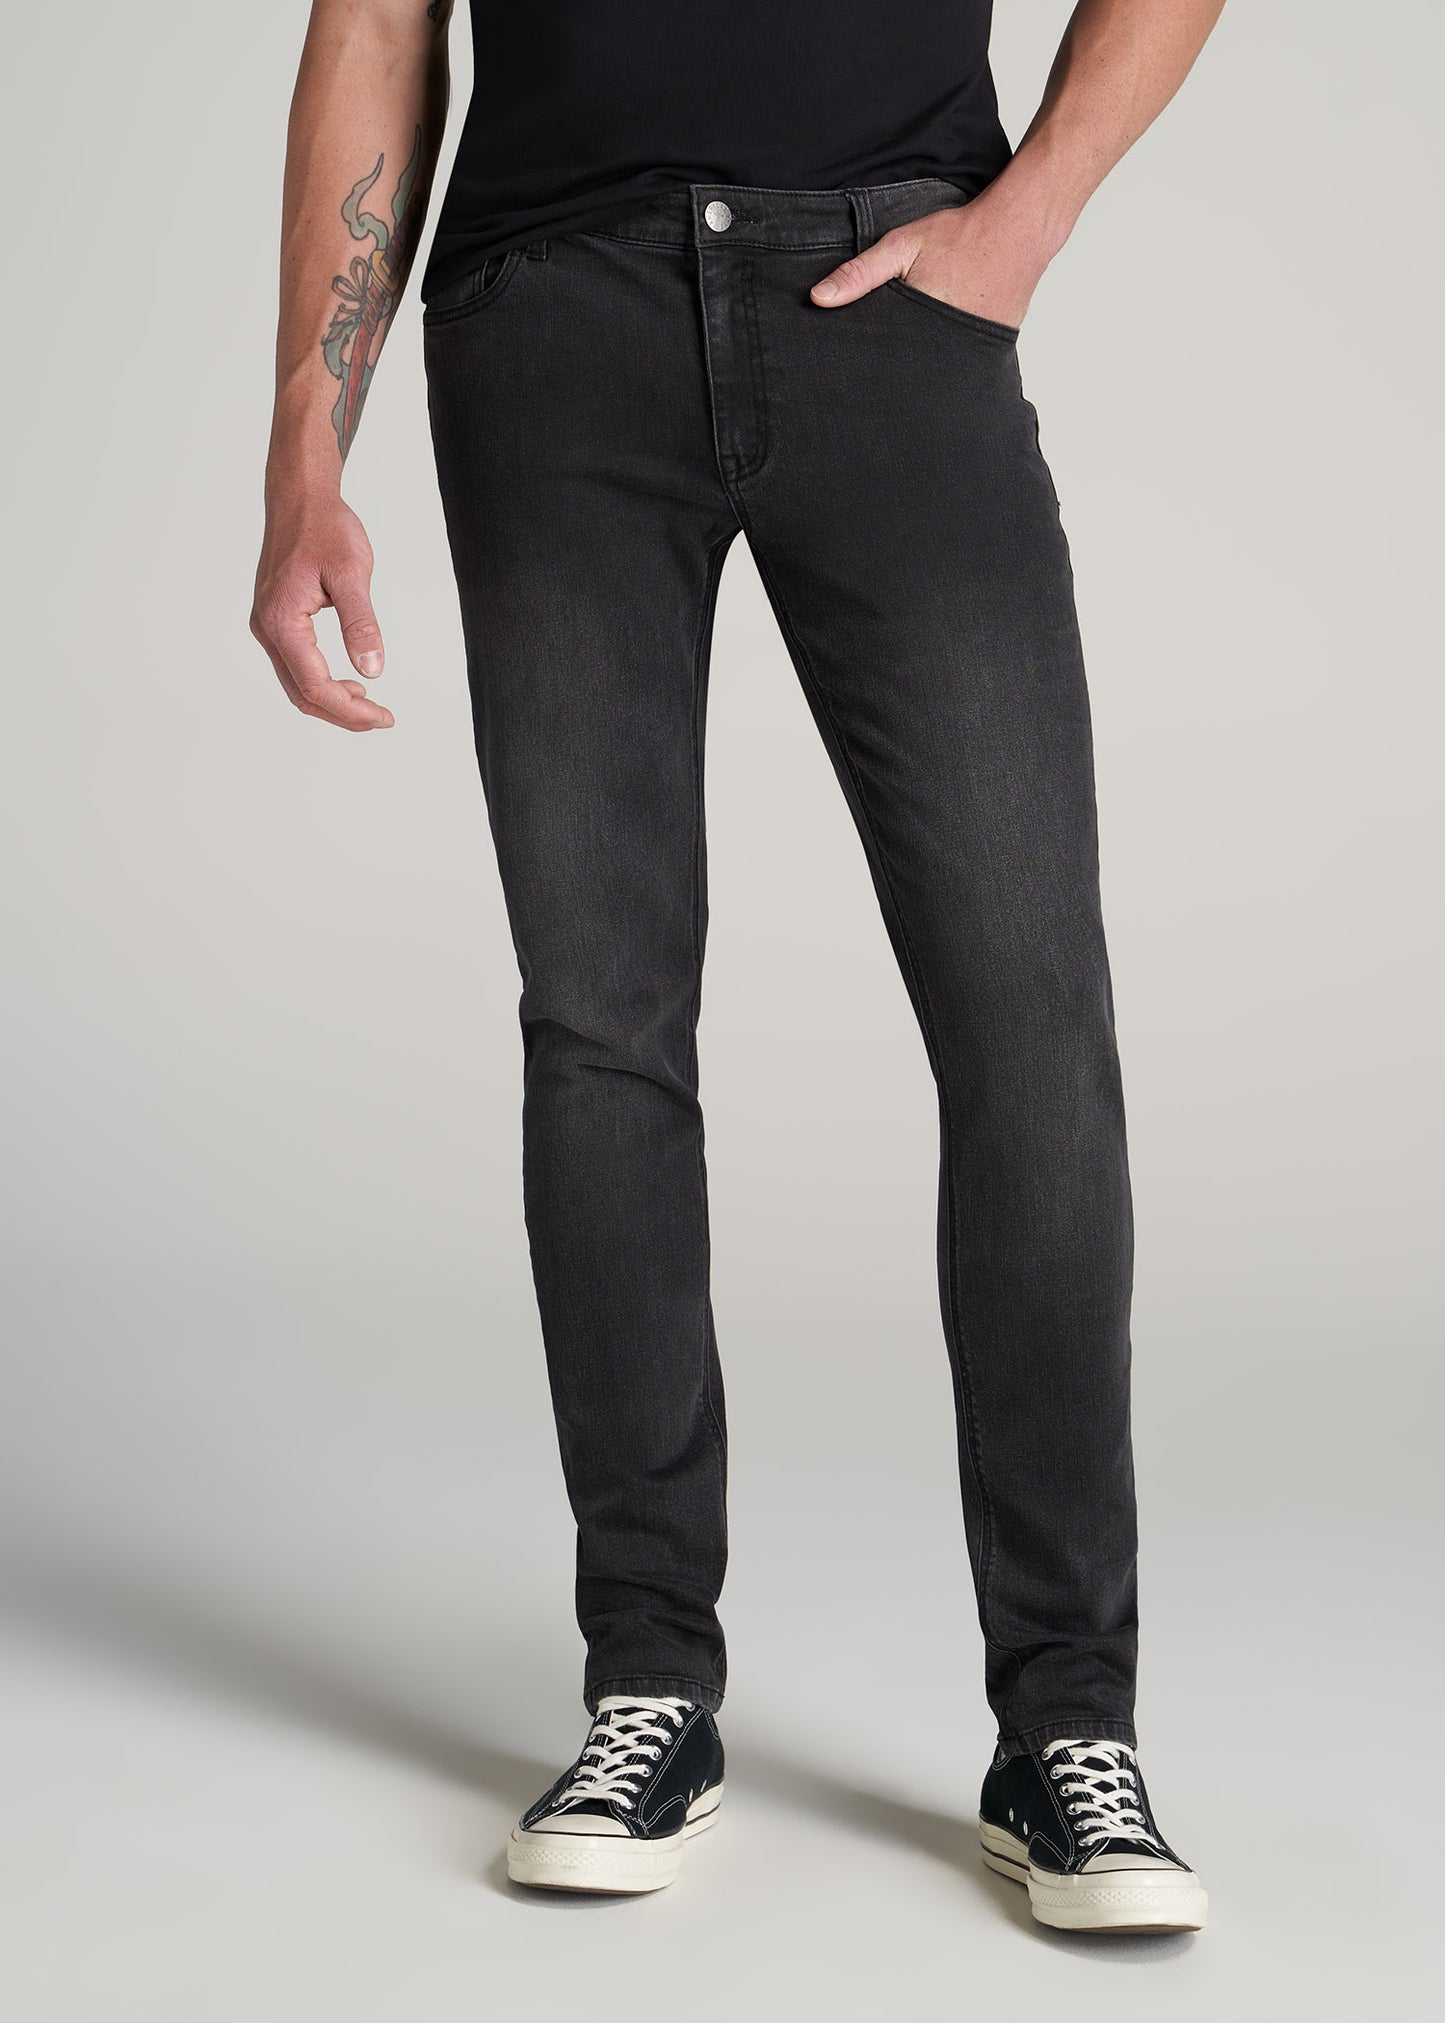 A tall man wearing American Tall's Travis Skinny Jeans for Tall Men in Dark Smoke.